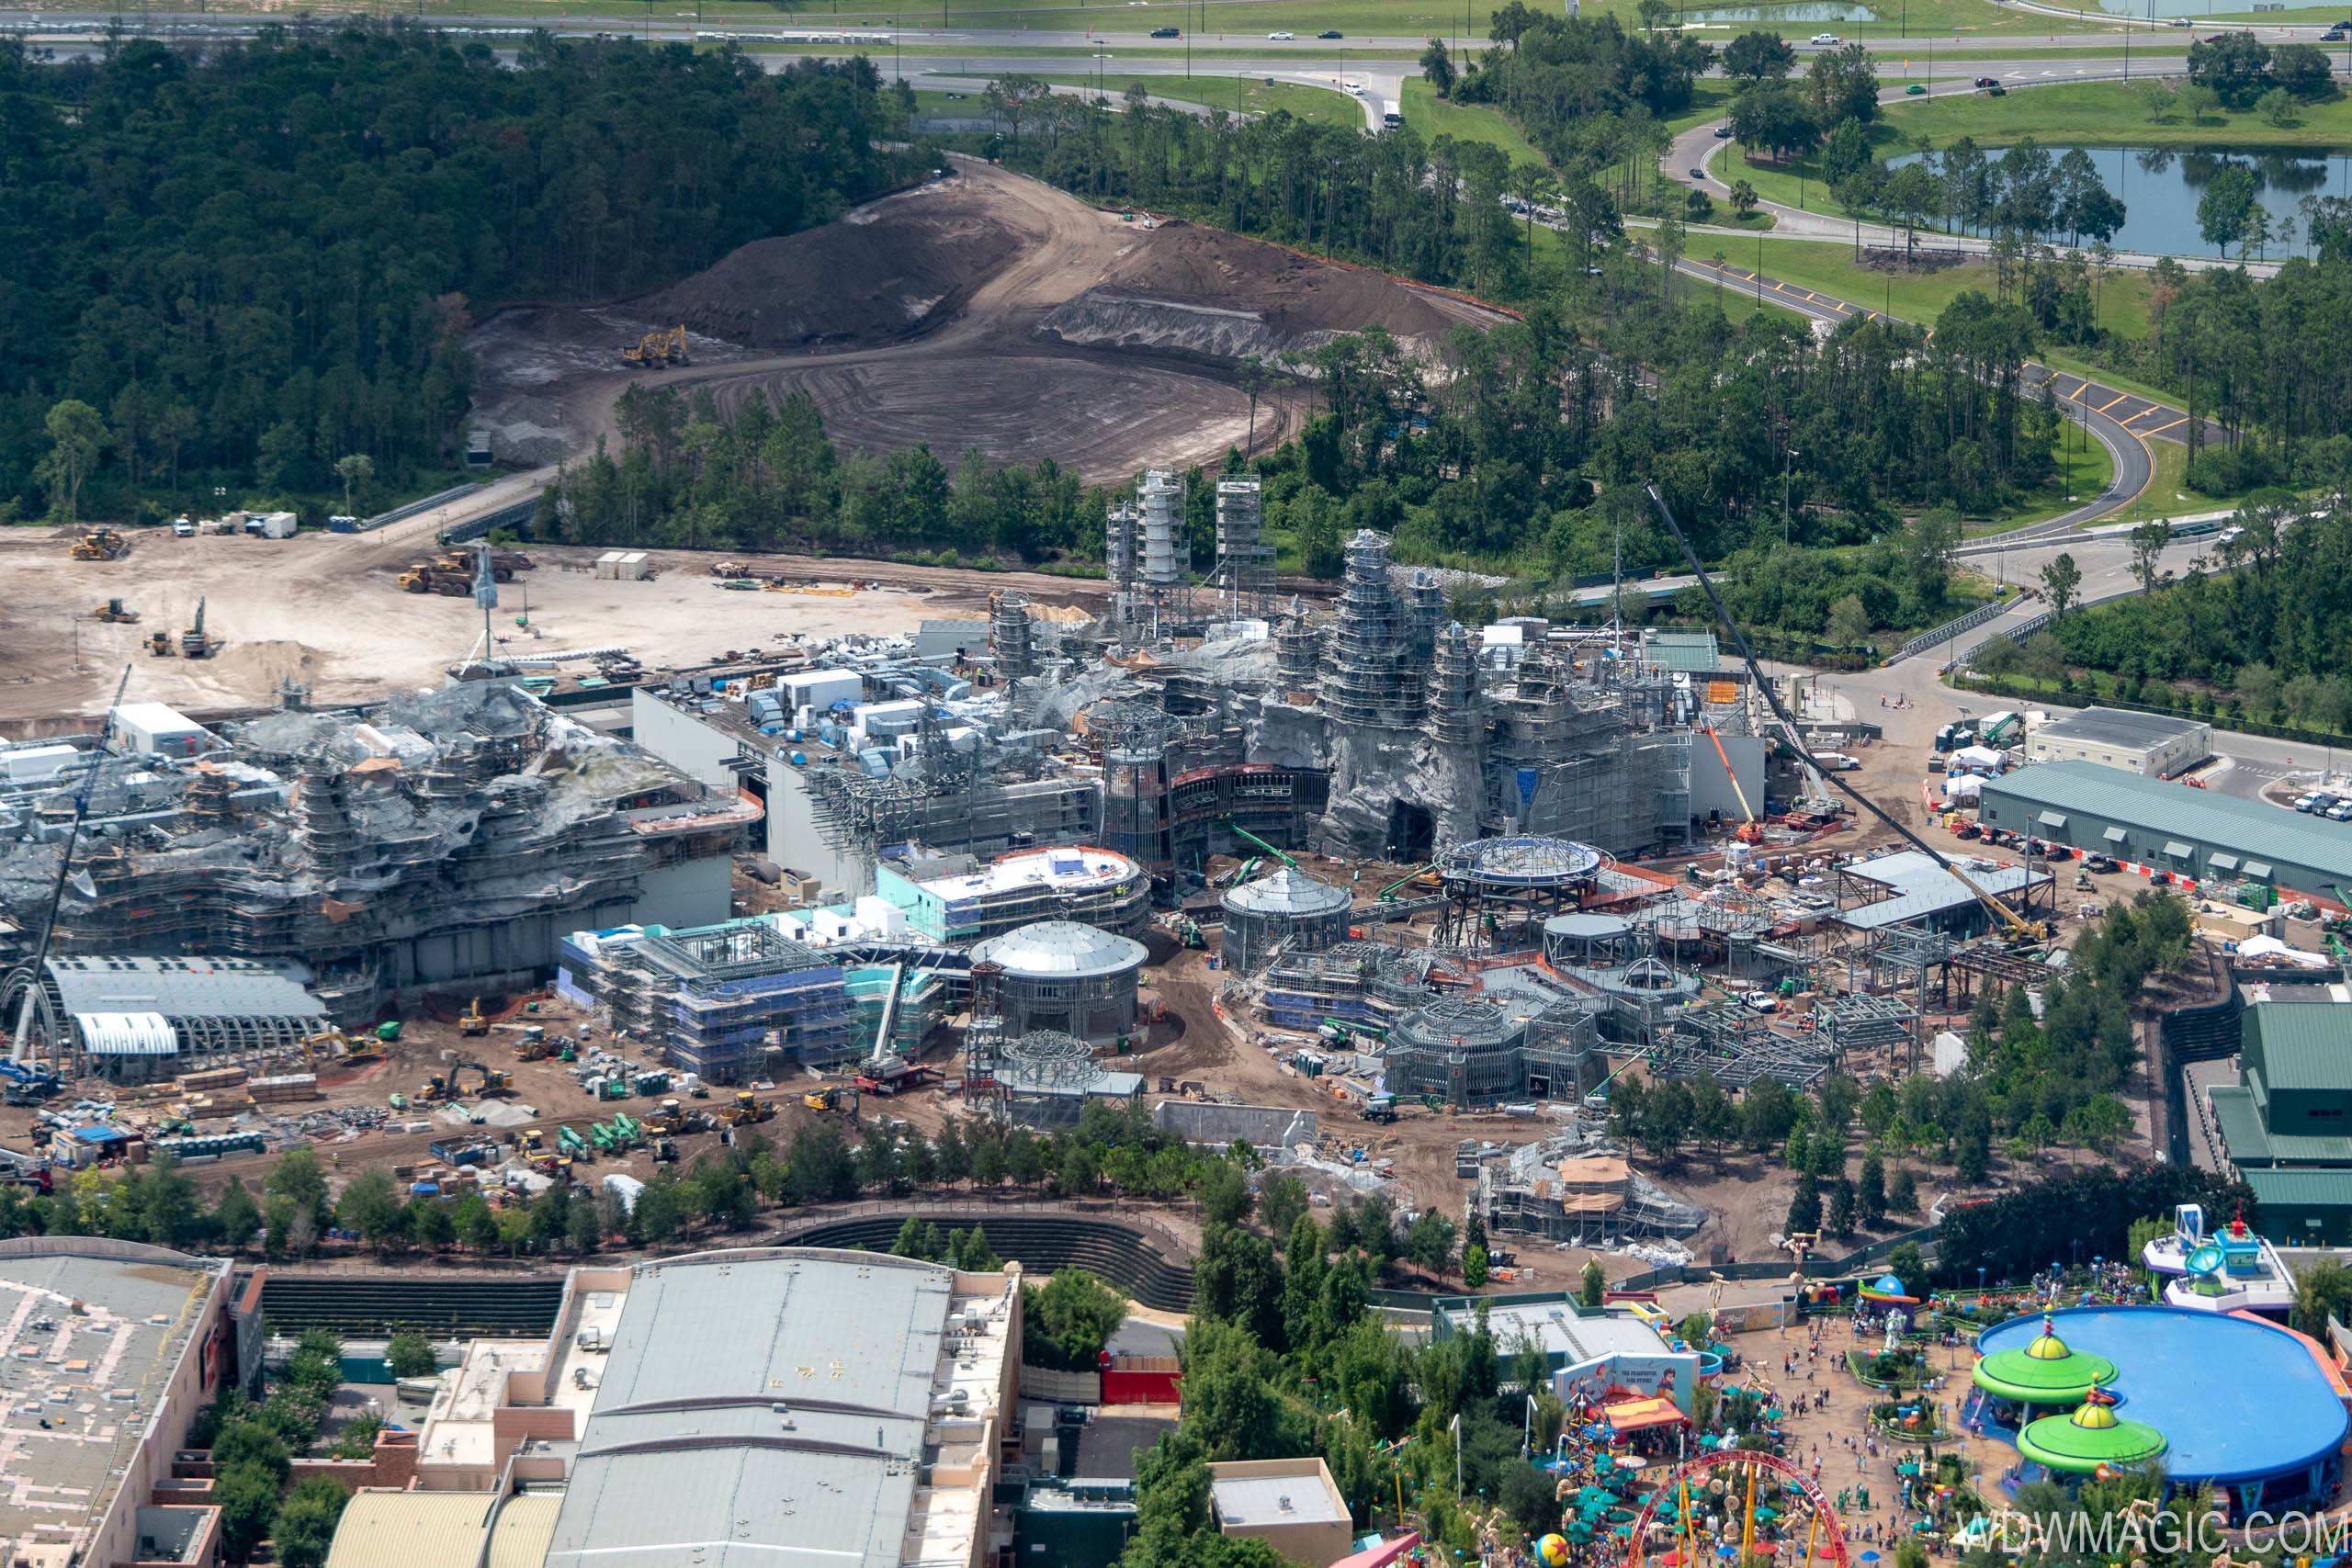 PHOTOS - Aerial views of Star Wars Galaxy's Edge construction